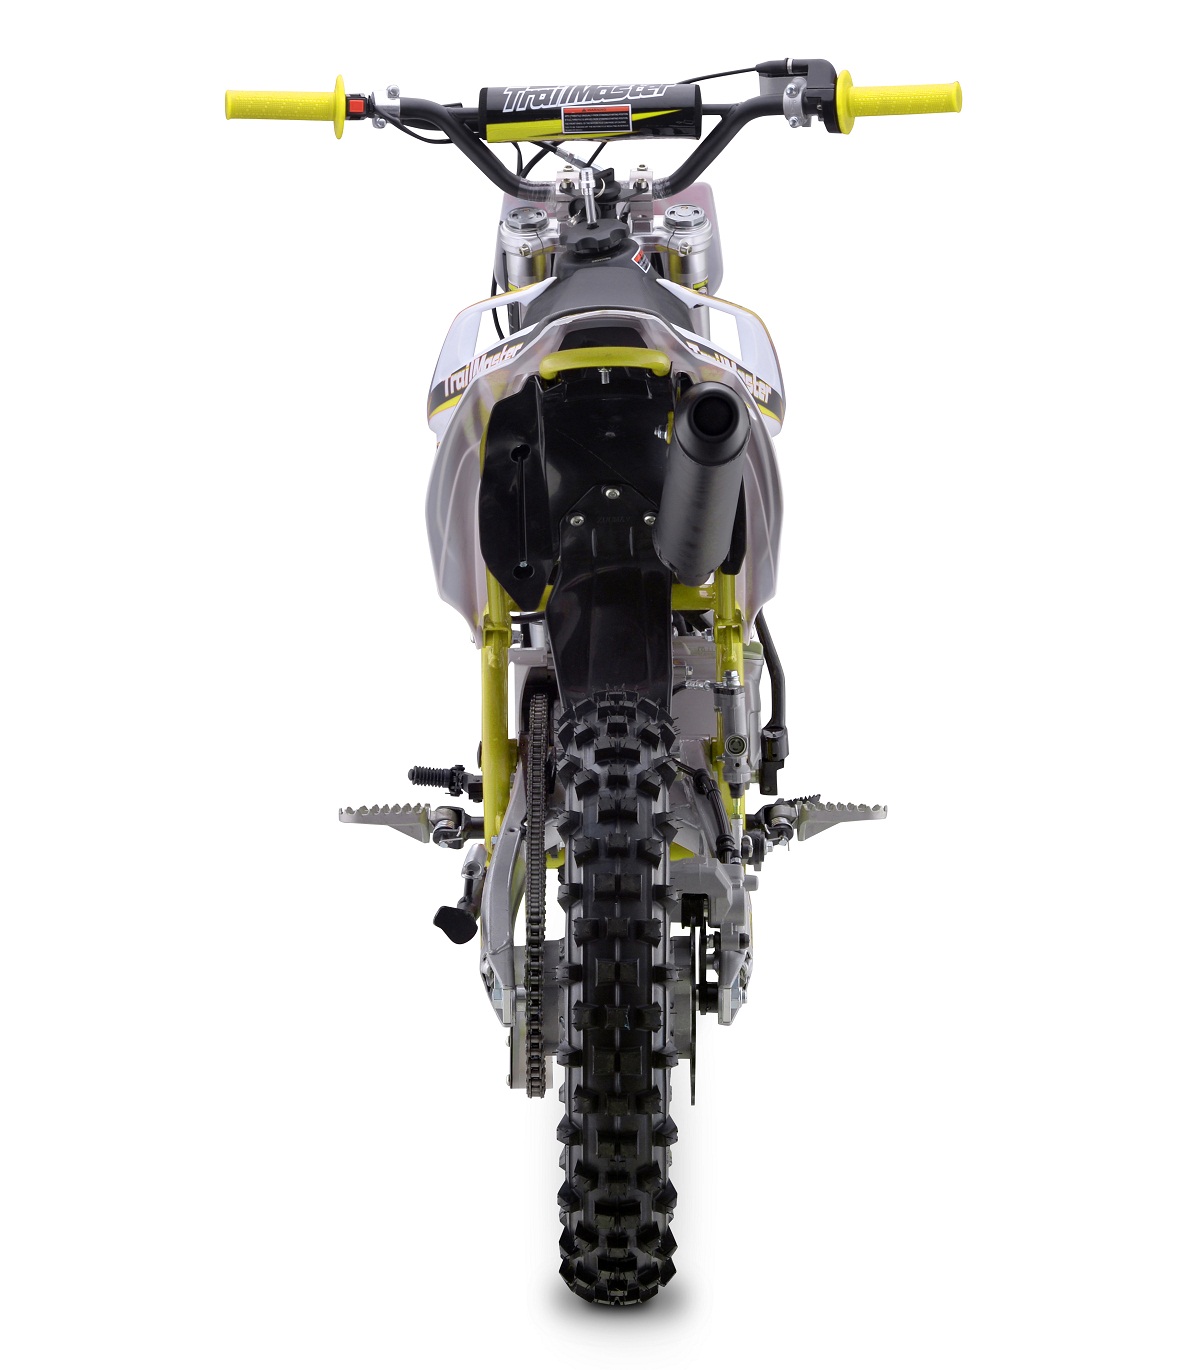 TM27 125cc Dirt Bike